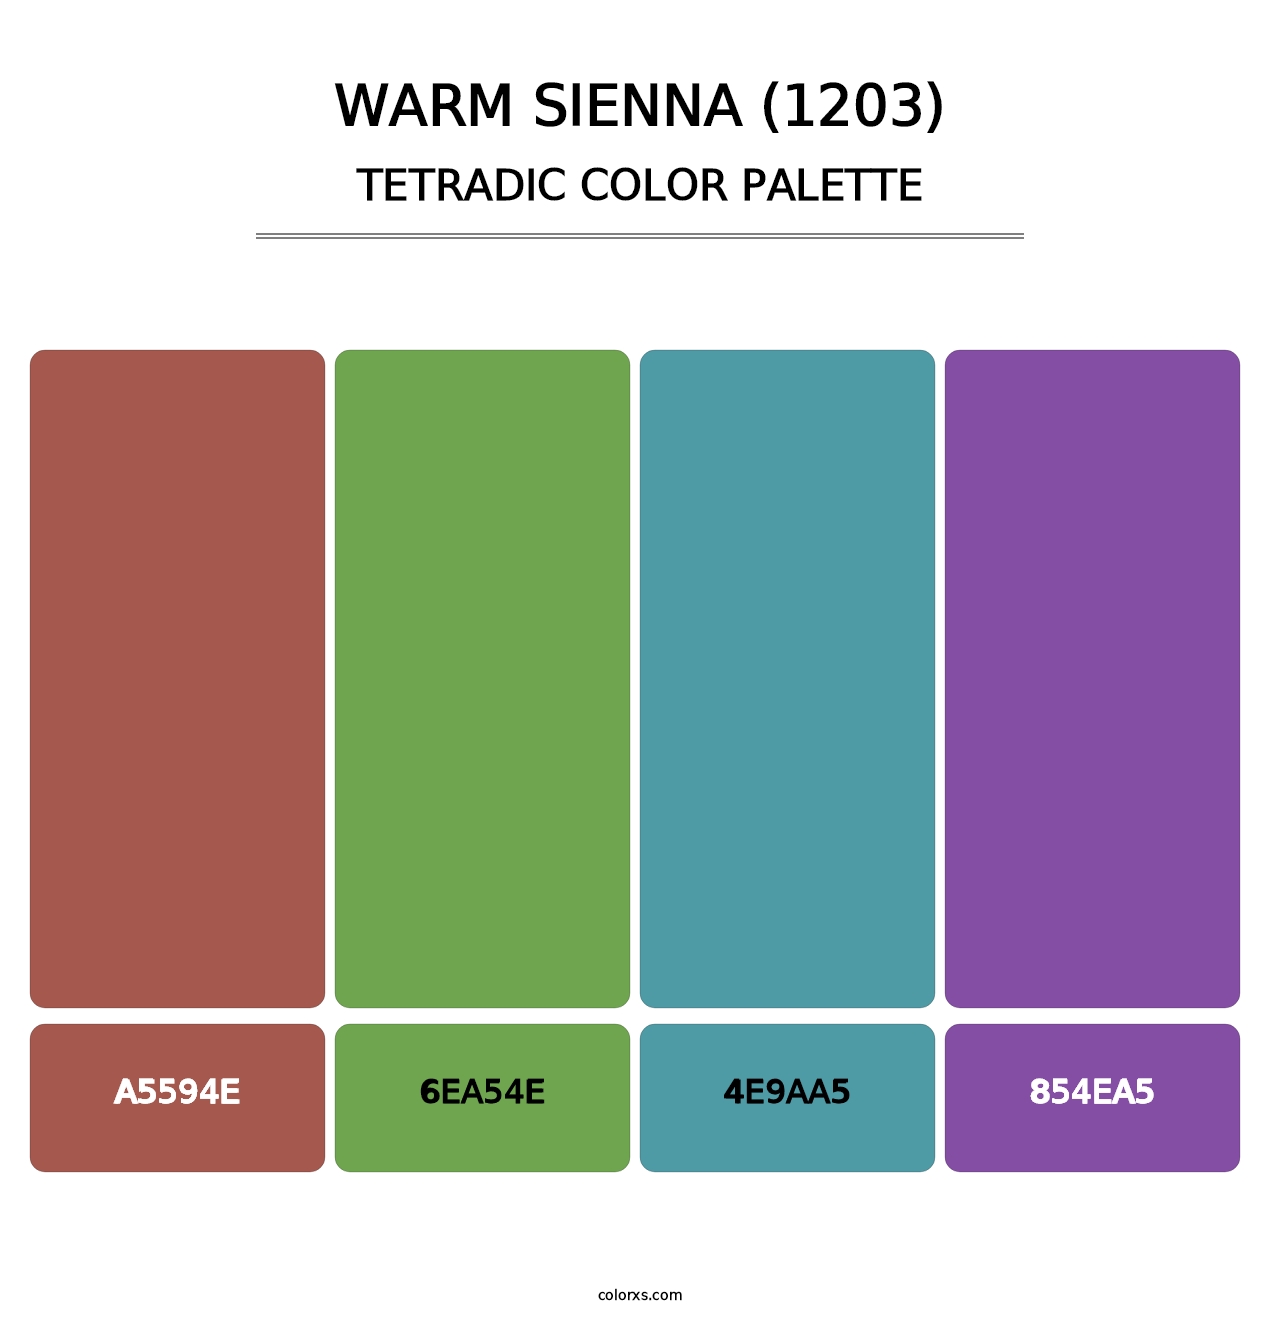 Warm Sienna (1203) - Tetradic Color Palette